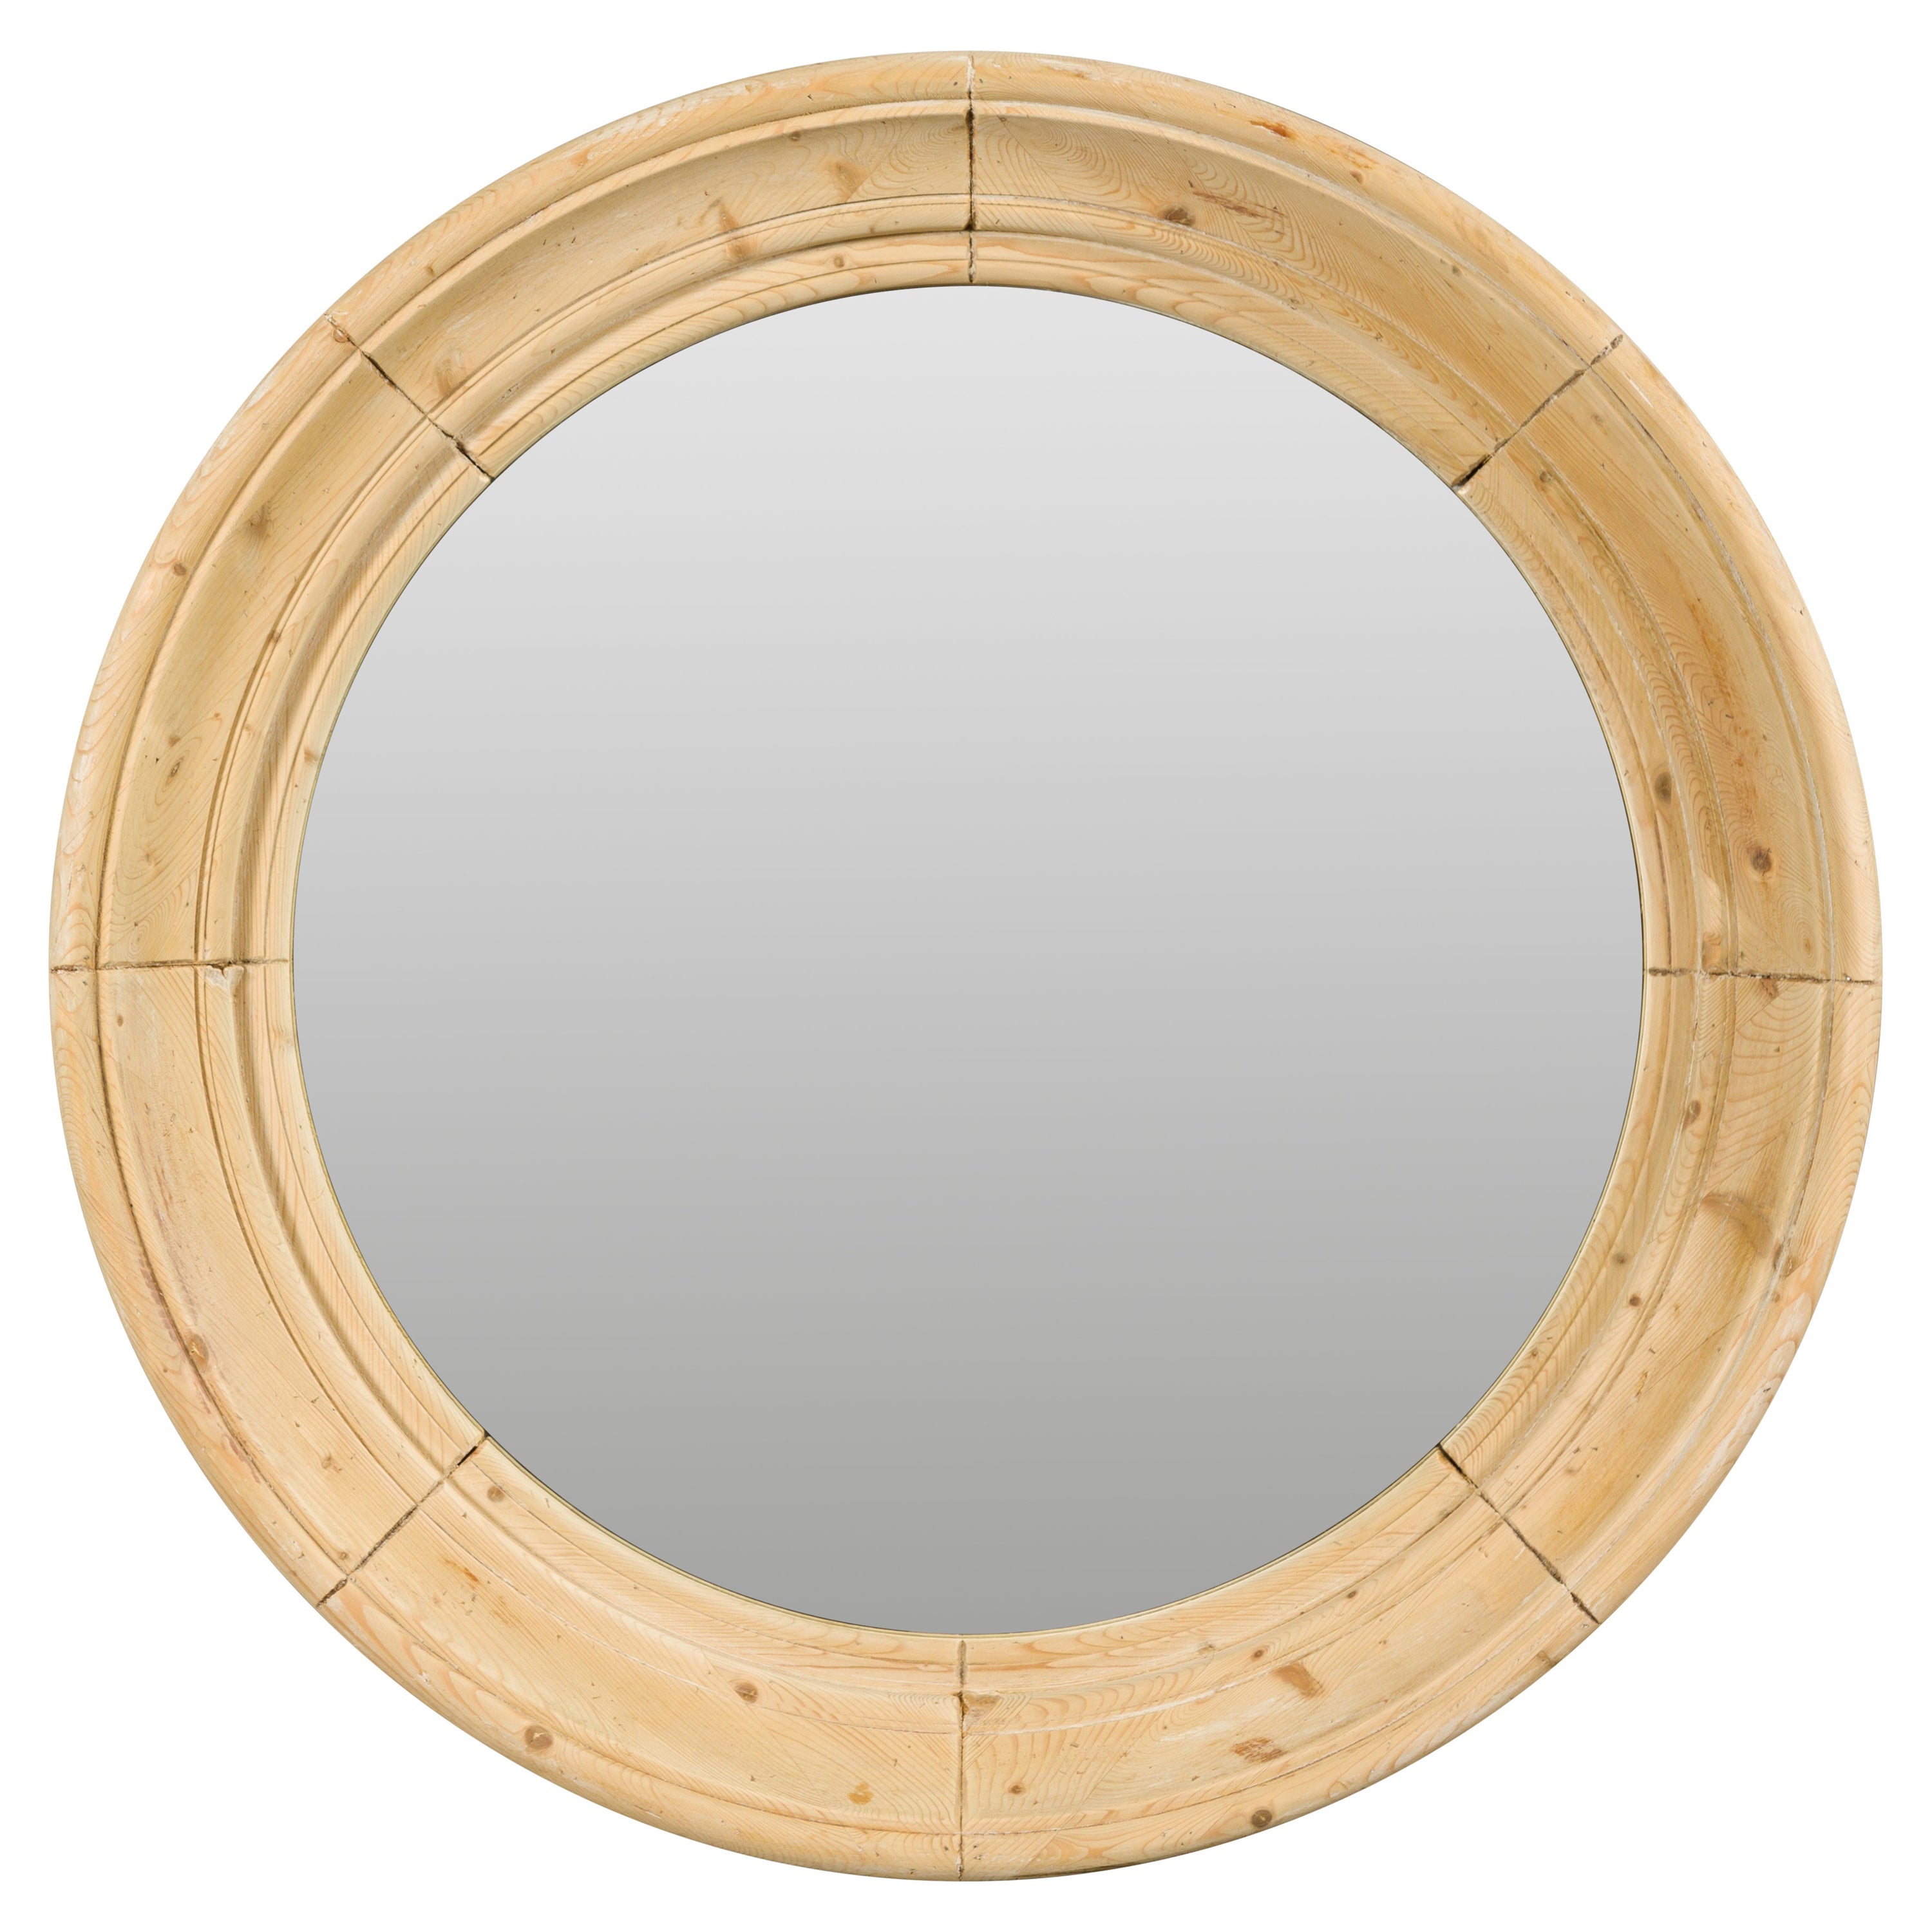 Rustic English Midcentury Pine Round Bullseye Mirror with Natural Finish